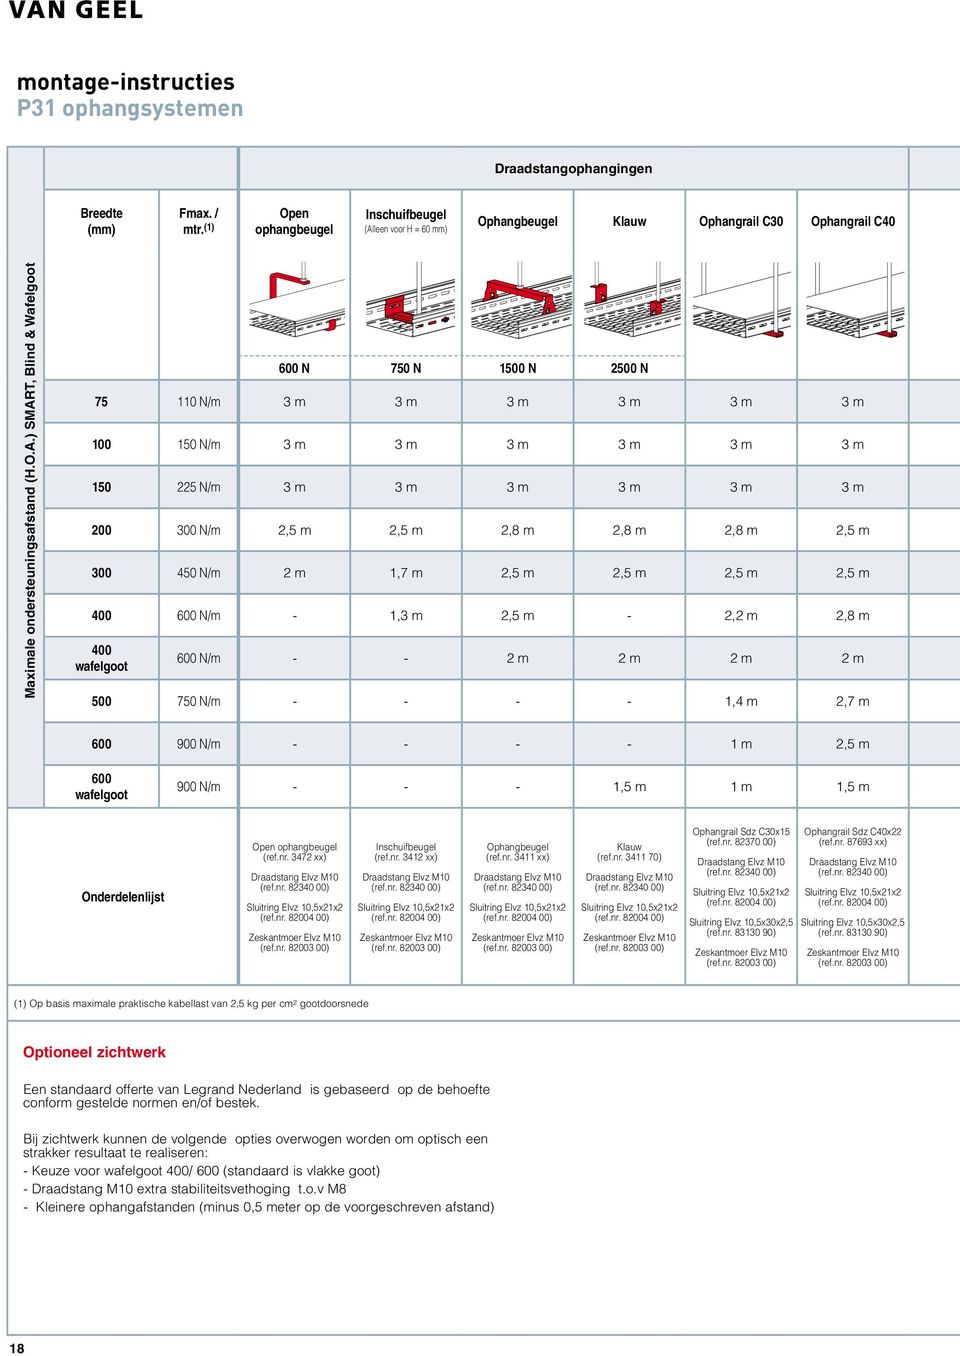 leen voor H = 60 mm) Ophangbeugel Klauw Ophangrail C30 Ophangrail C40 Maximale ondersteuningsafstand (H.O.A.